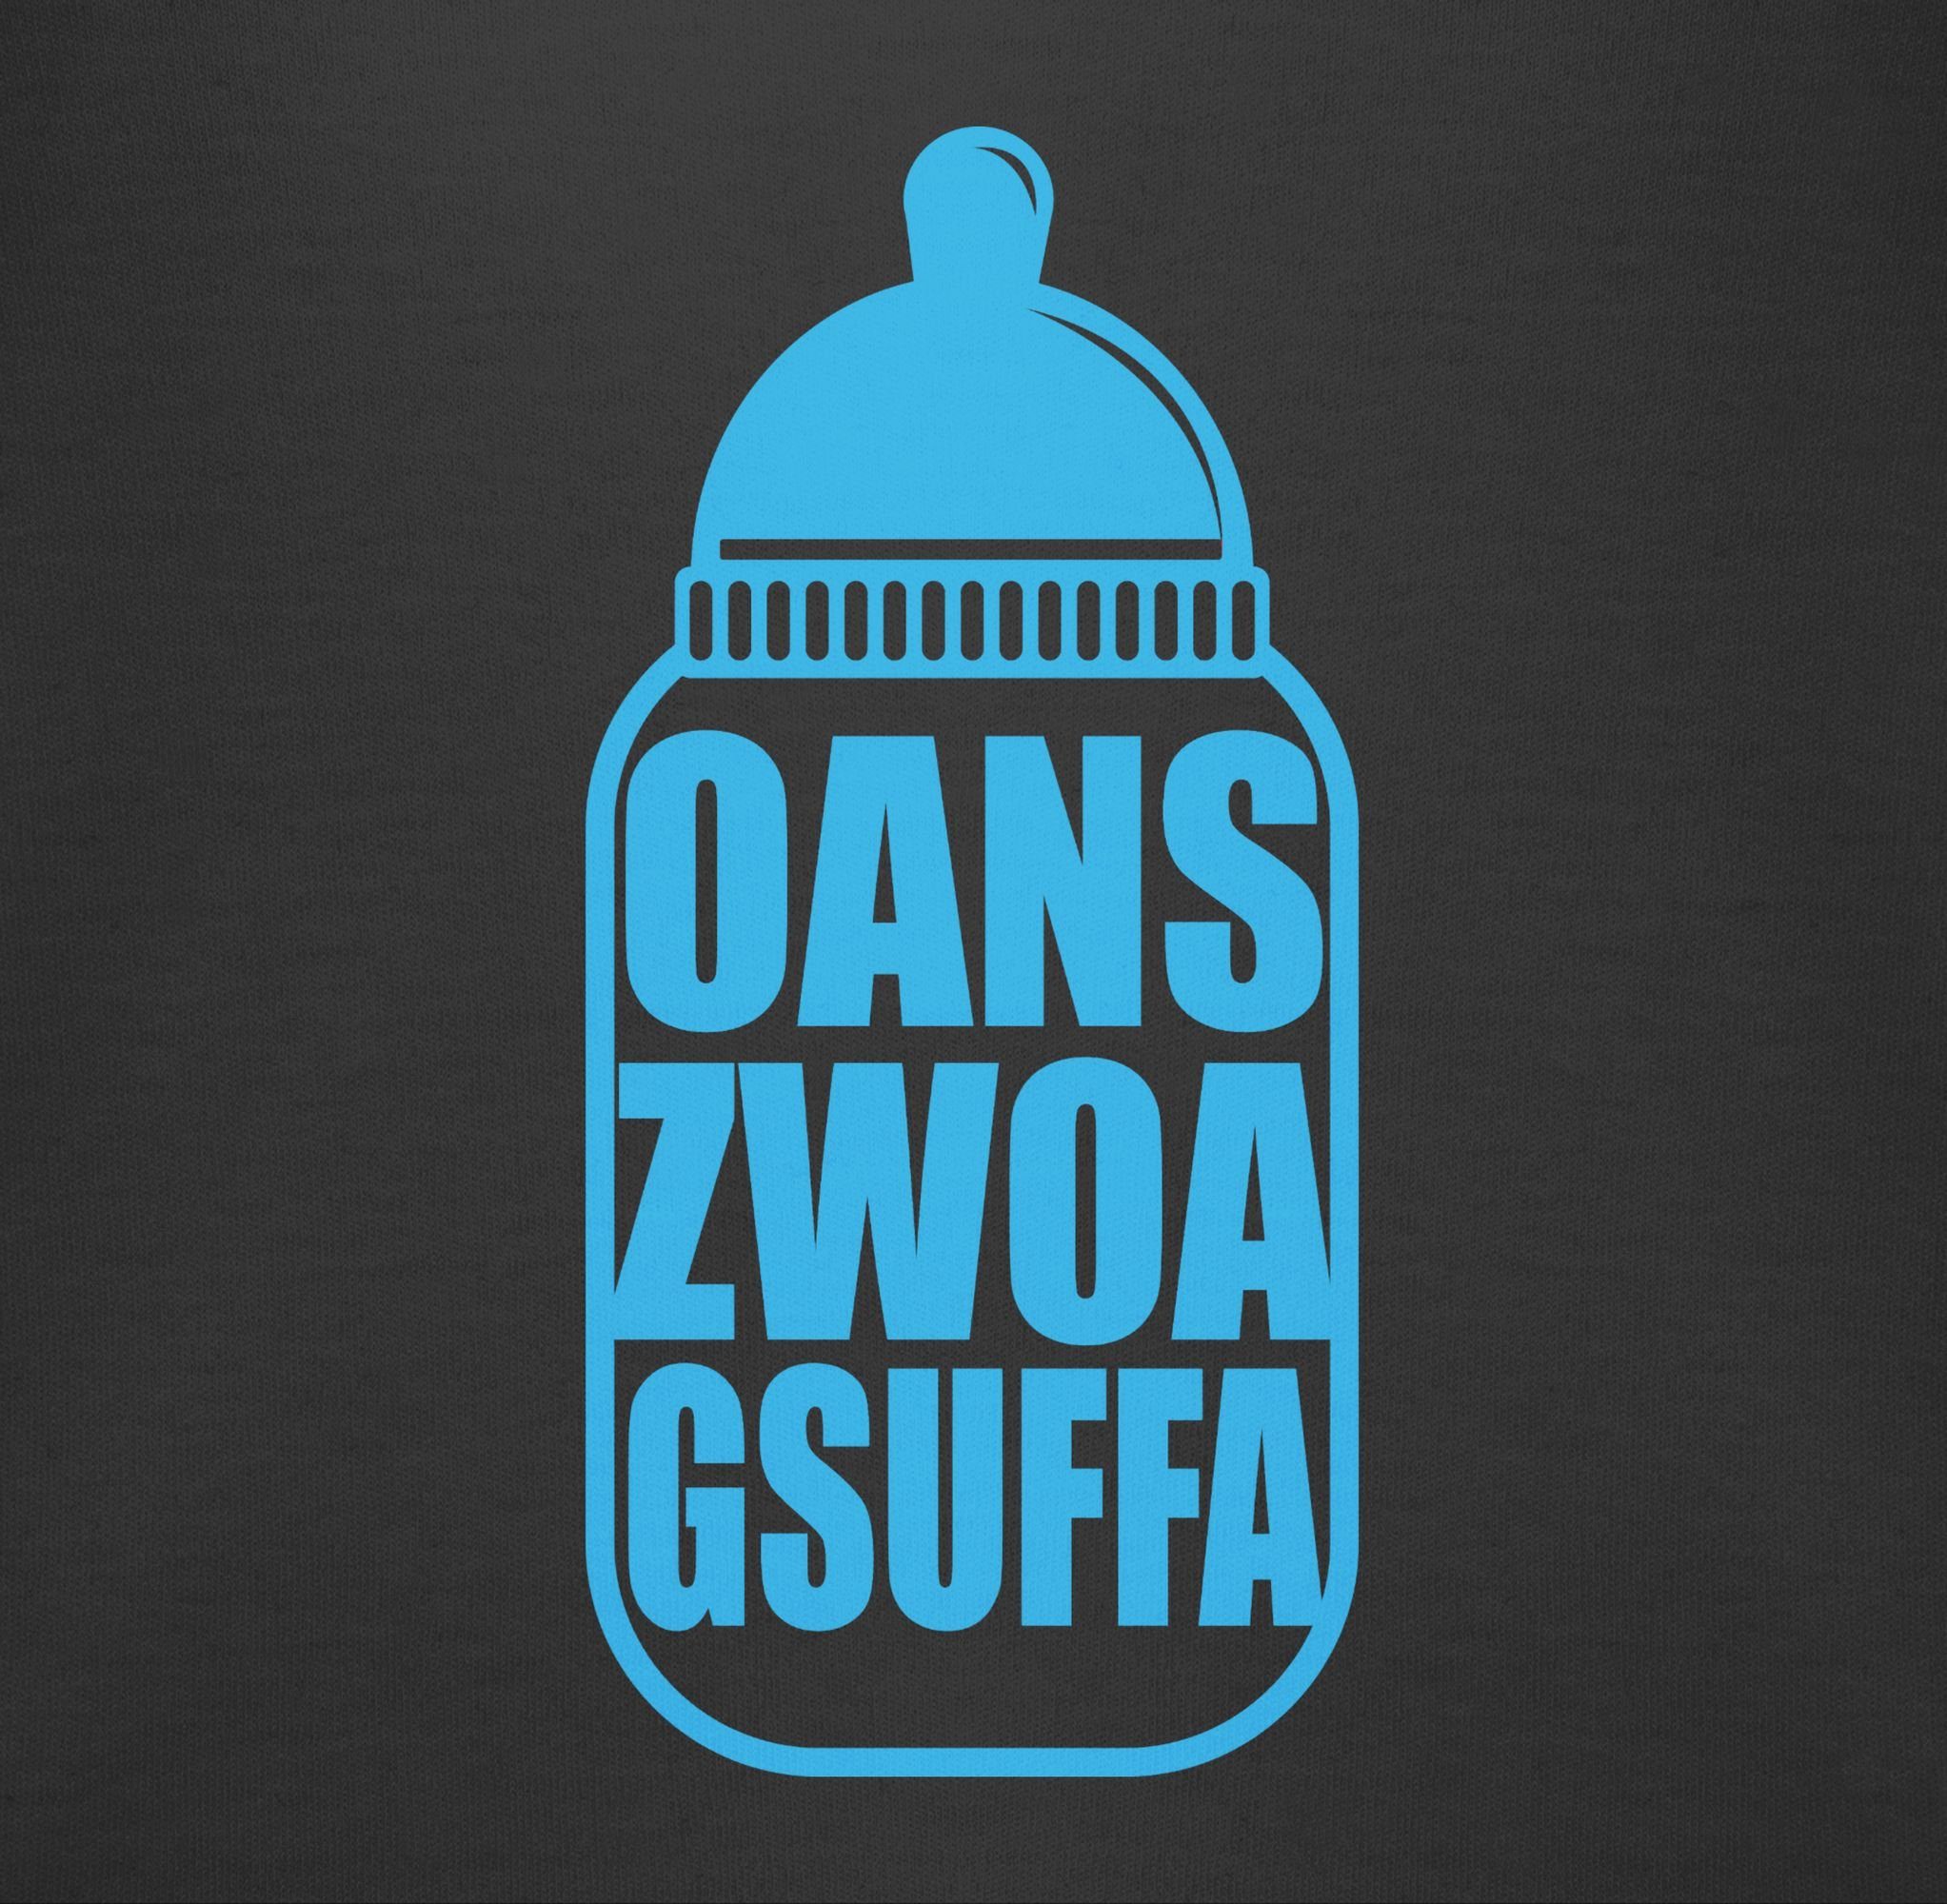 Shirtracer Shirtbody Babyflasche blau Mode Gsuffa Oktoberfest Oans Baby für Schwarz 3 Outfit Zwoa